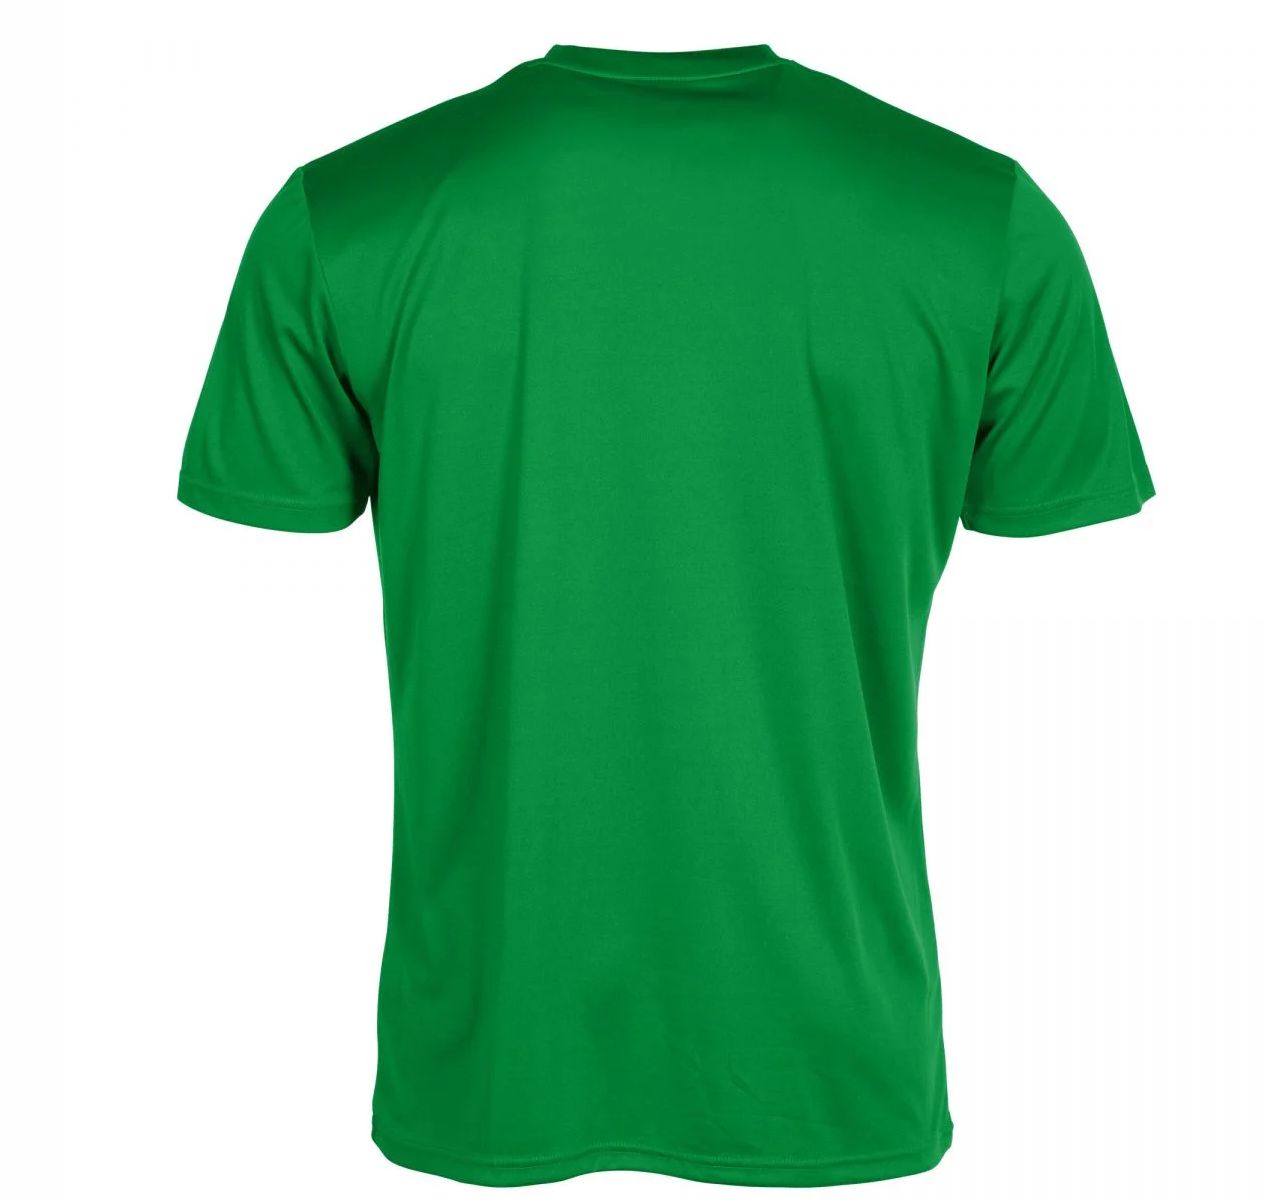 Stanno - Field Shirt - Green